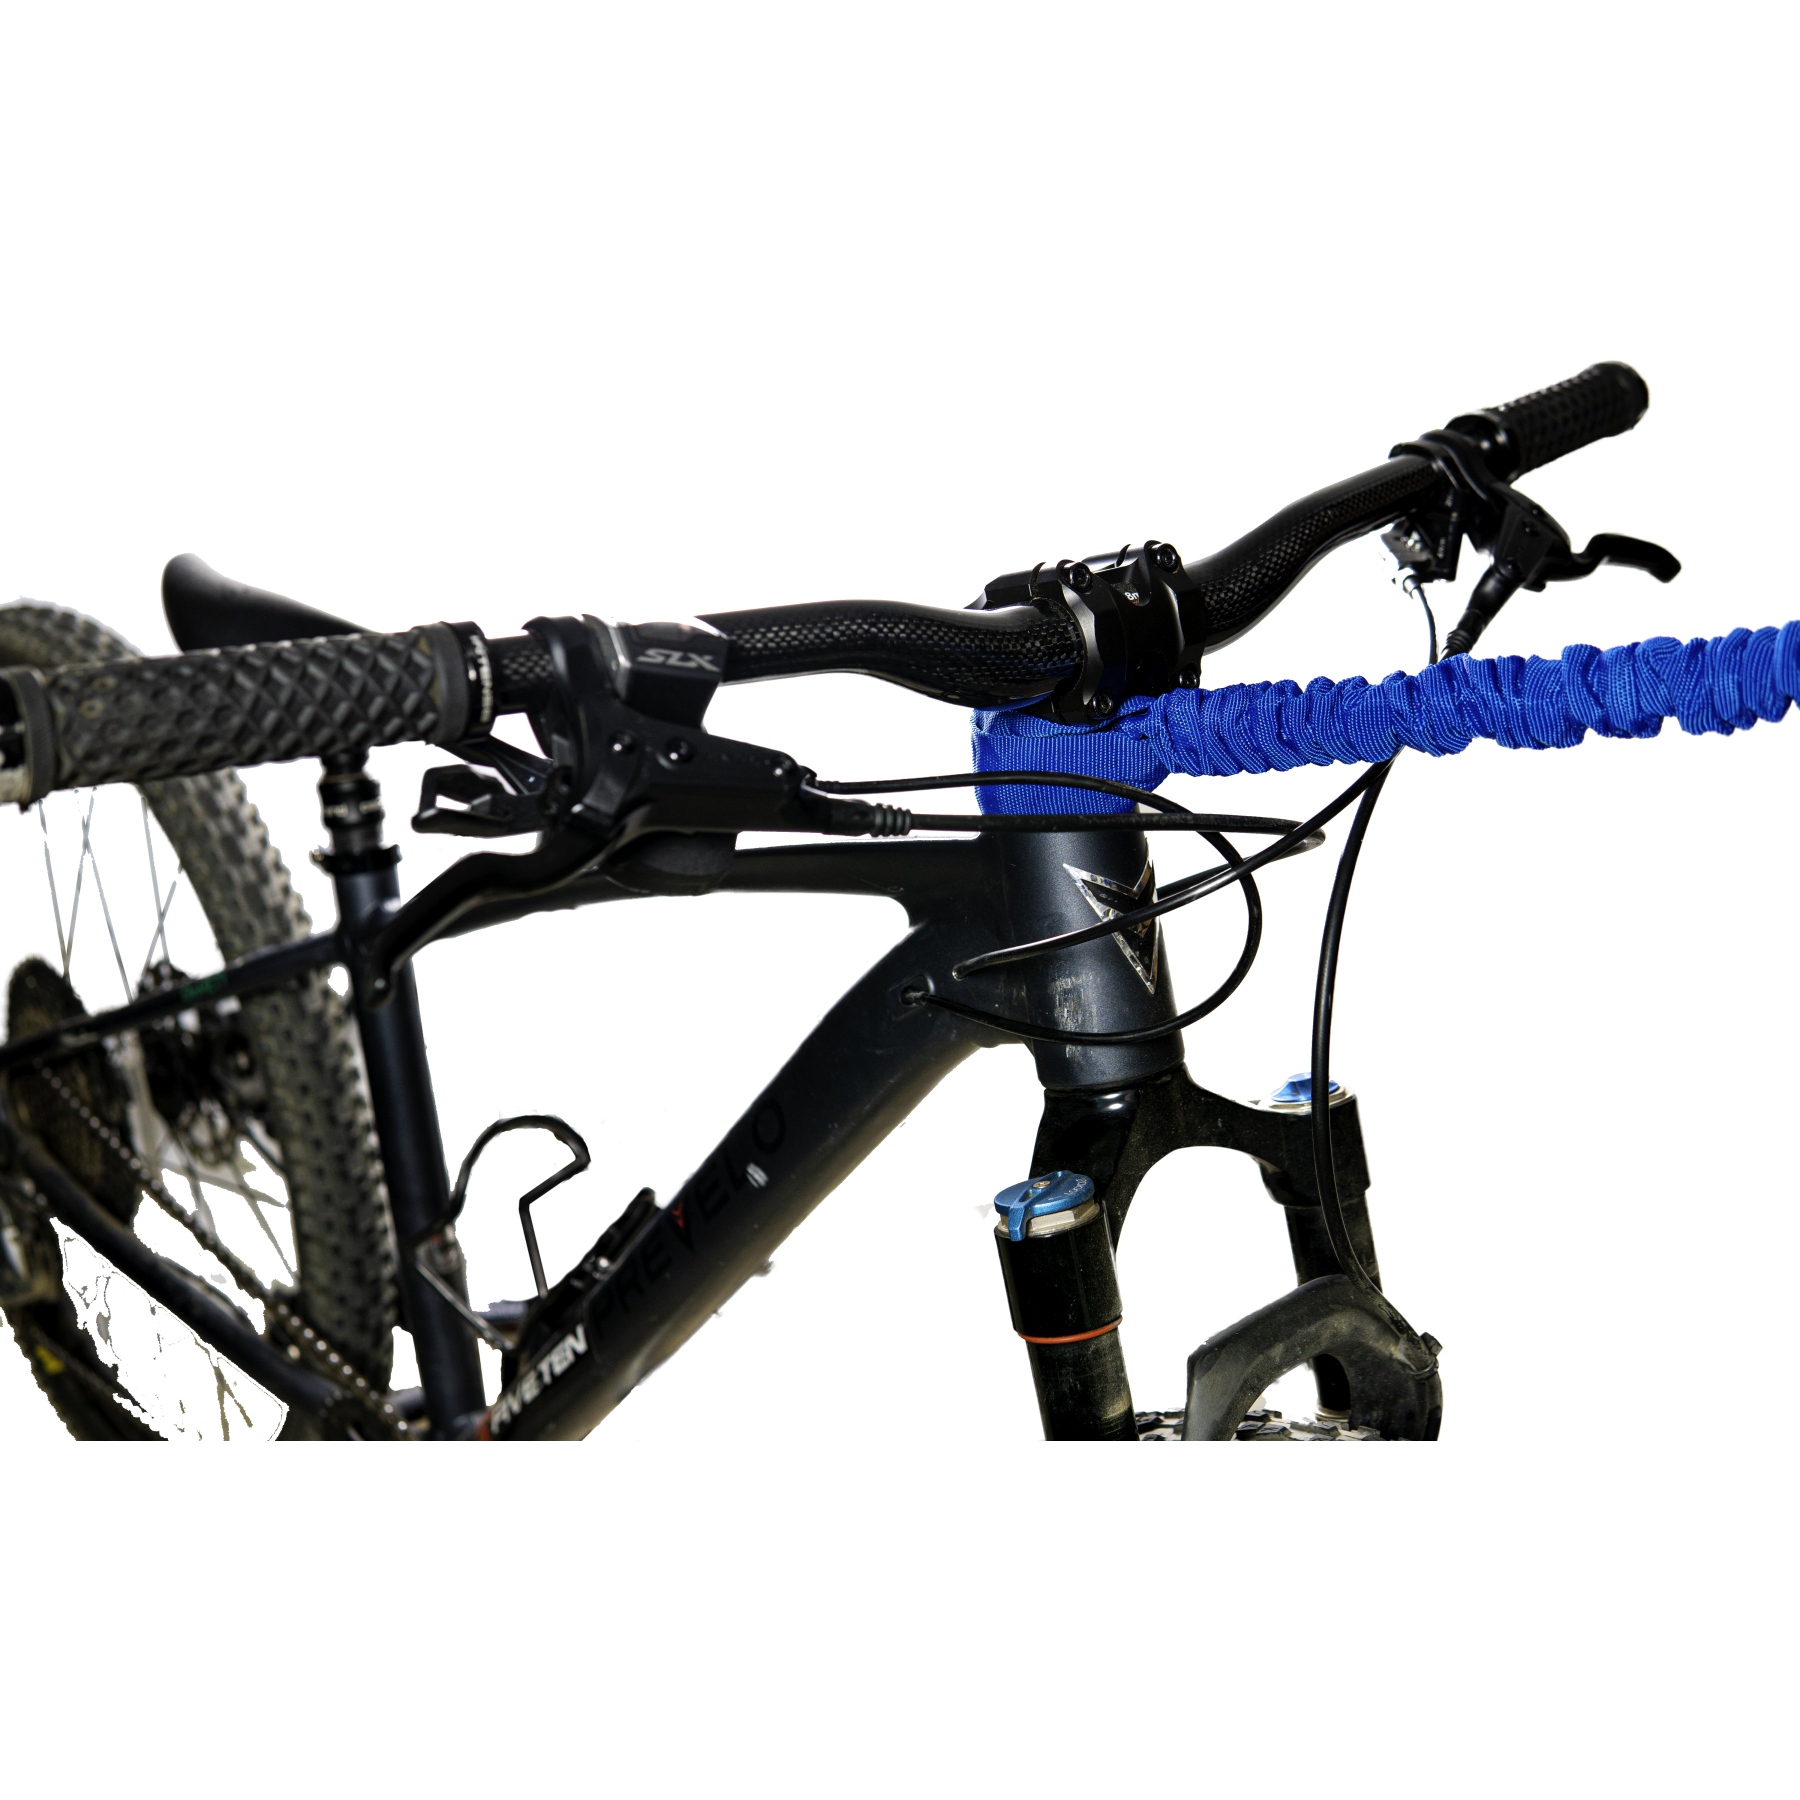 https://images.bike24.com/i/mb/70/da/a8/towwhee-winter4-seasons-bicycle-tow-rope-blue-2-998234.jpg